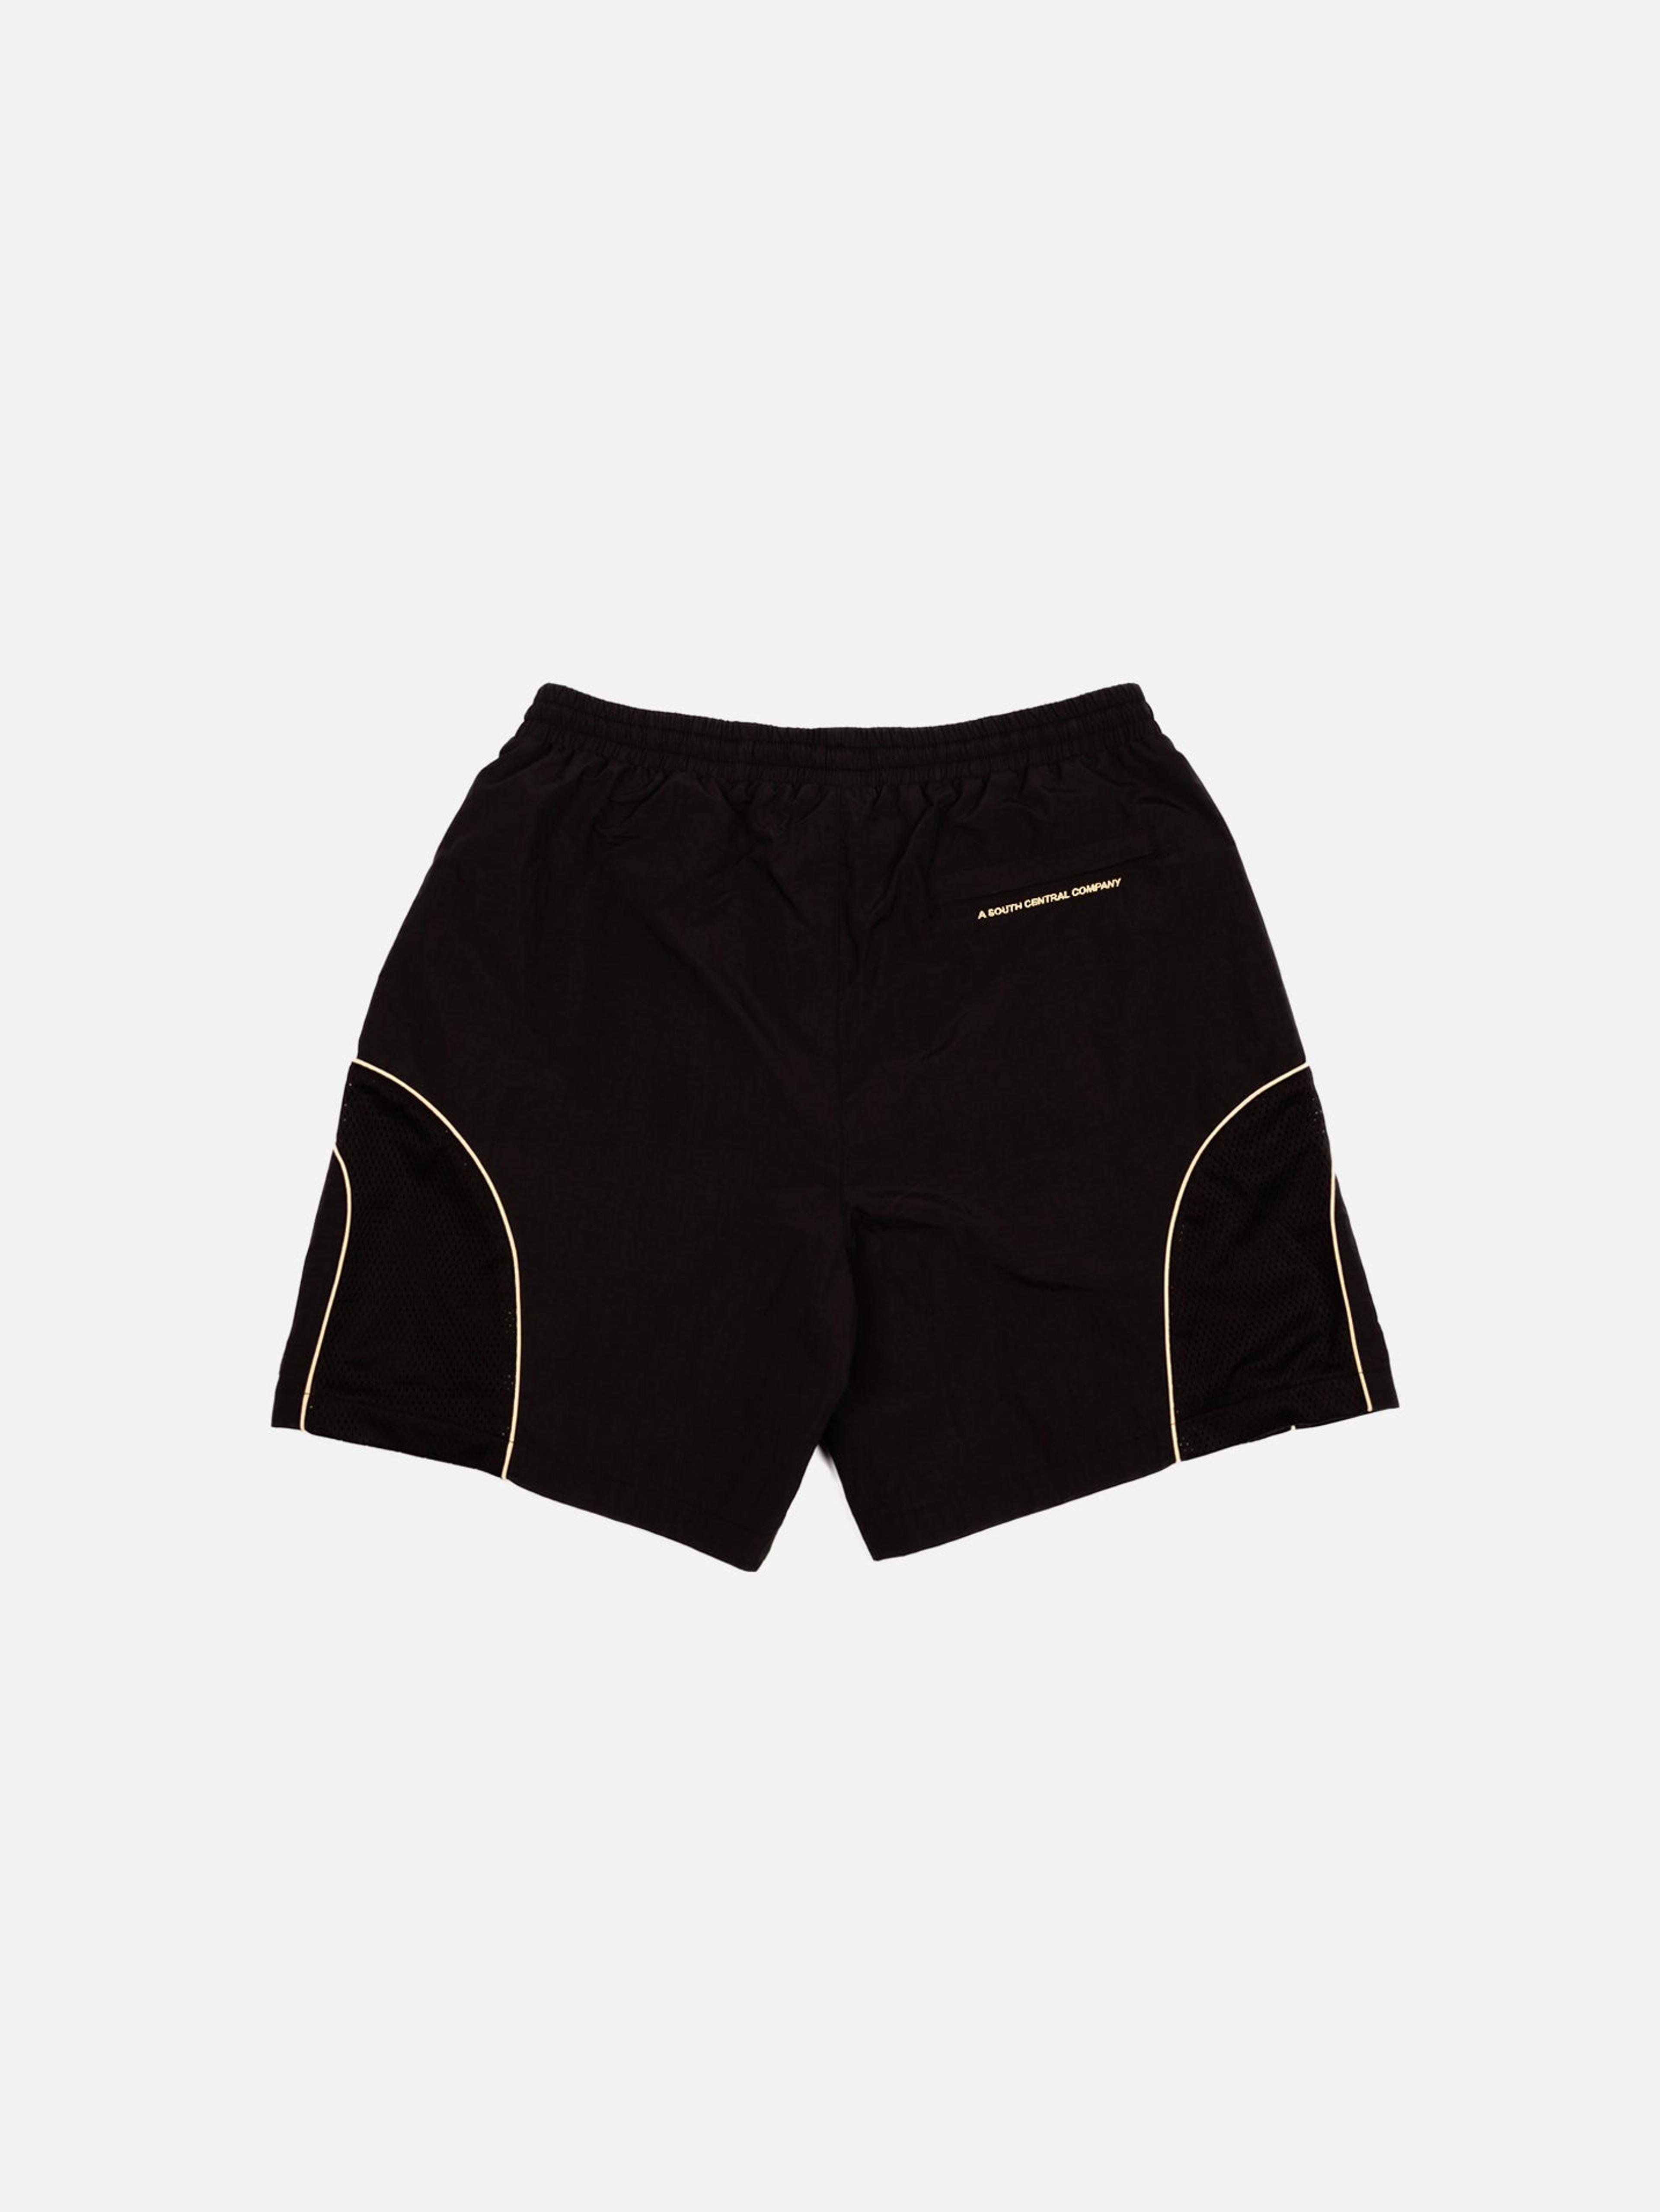 Alternate View 1 of Nylon Half Court Shorts - Black